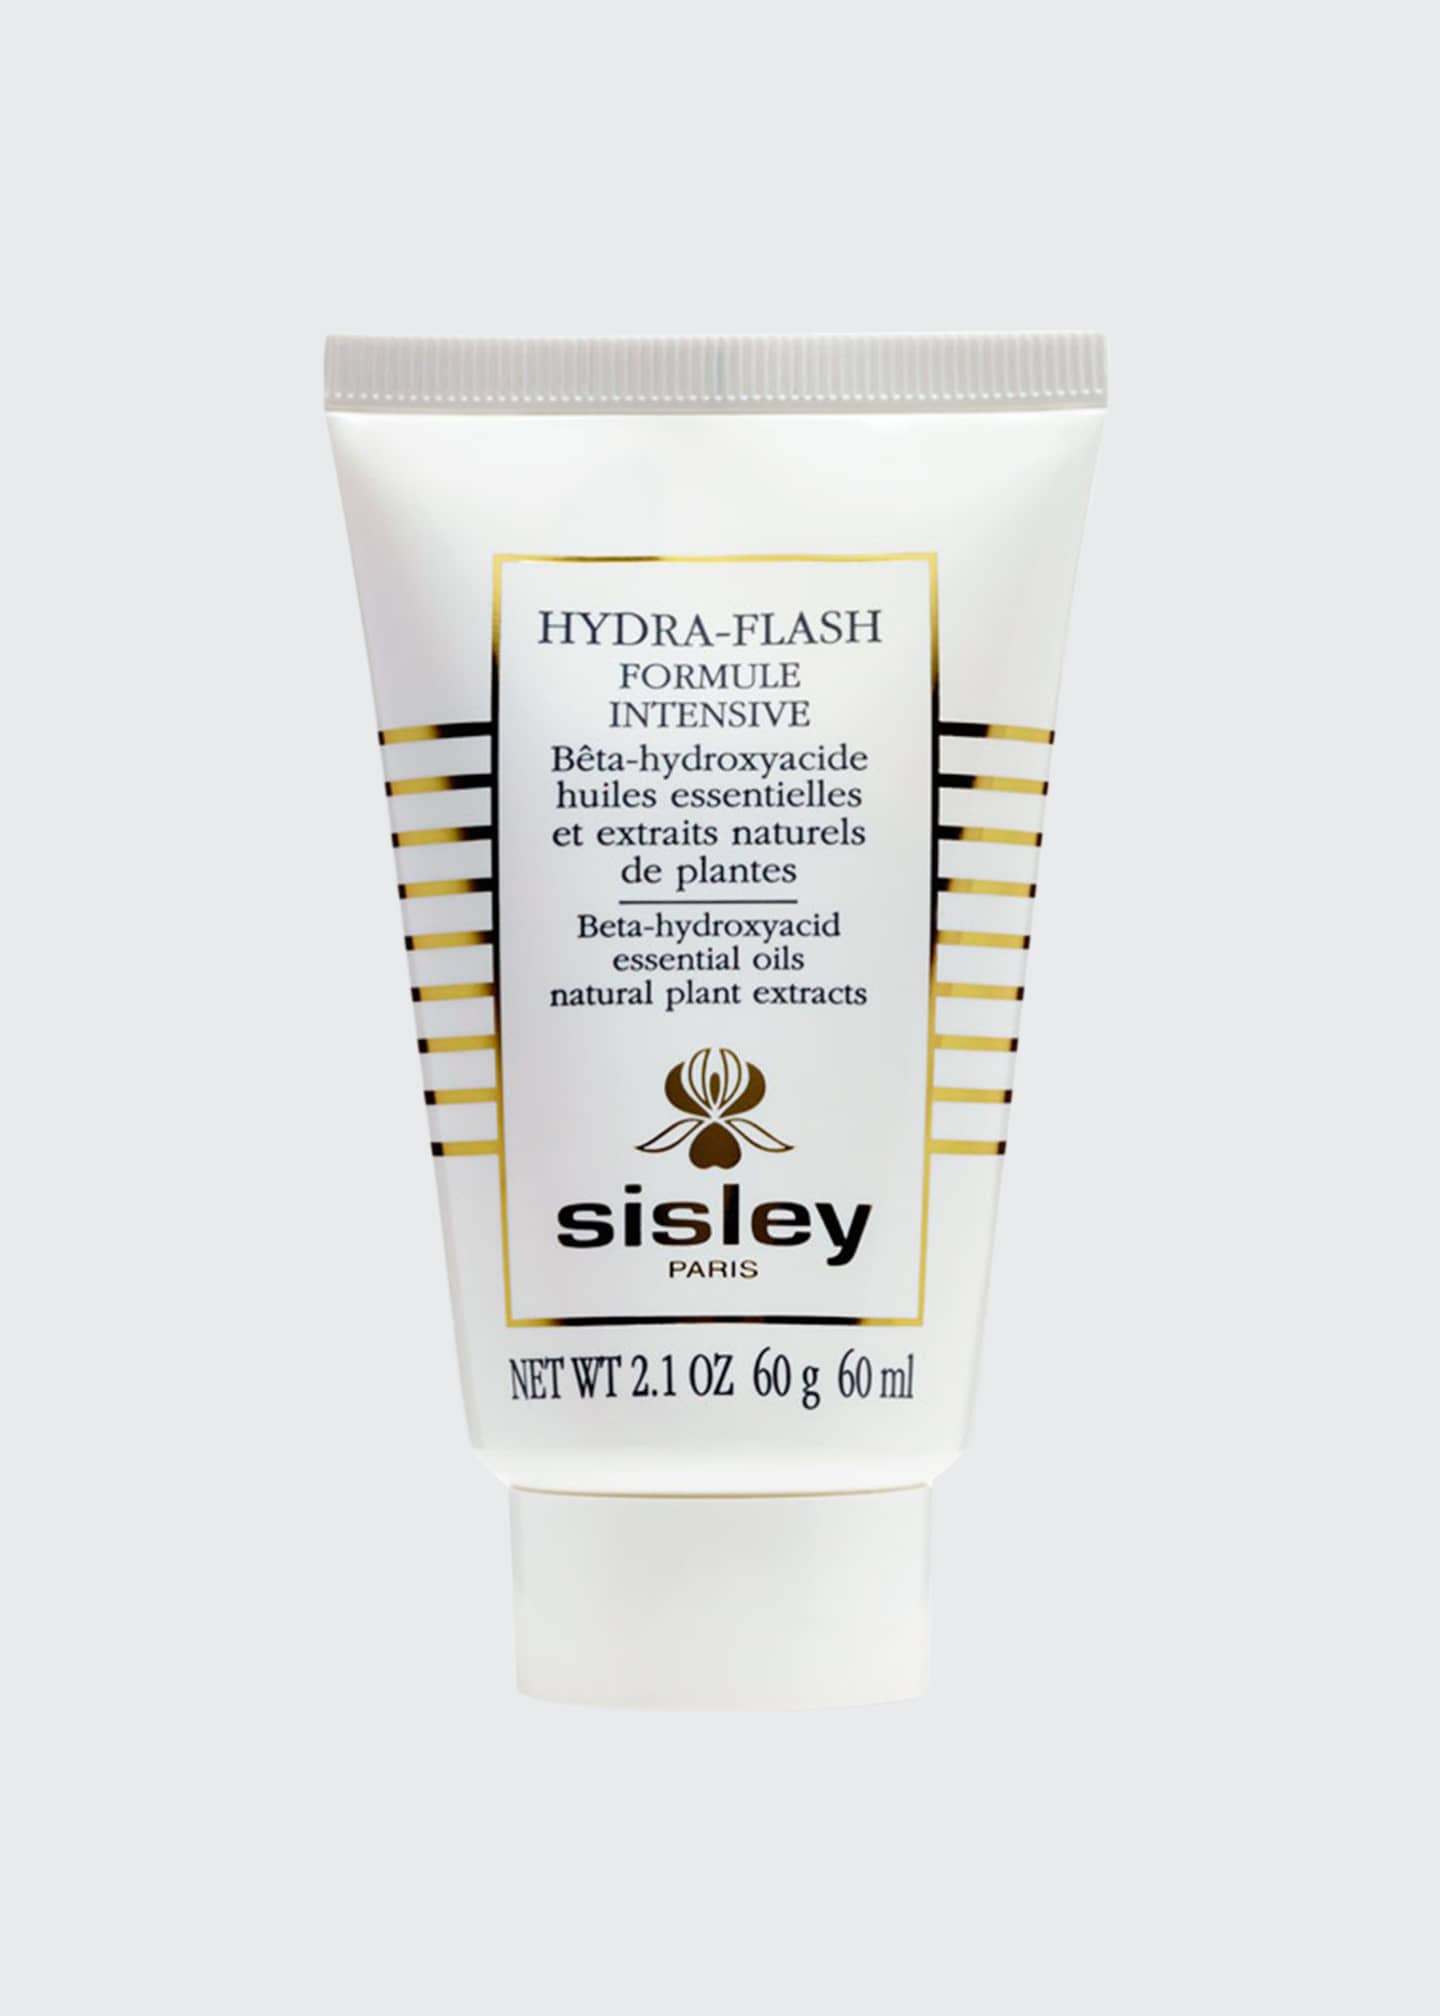 Sisley-Paris Hydra-Flash Mask - Goodman